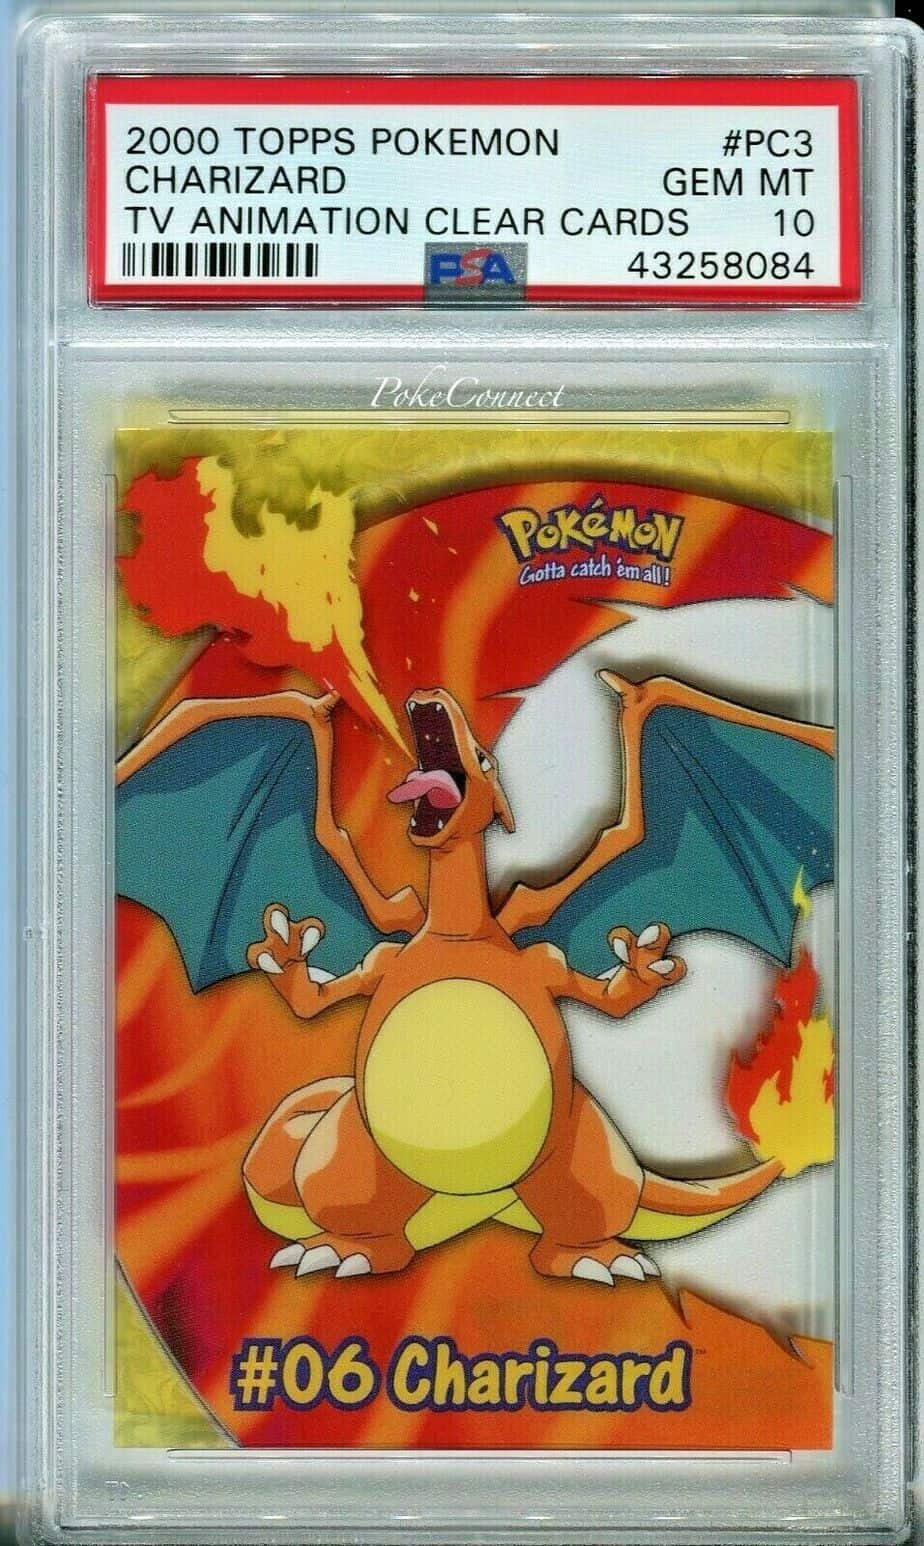 Rare Pokemon Topps Cards - Charizard